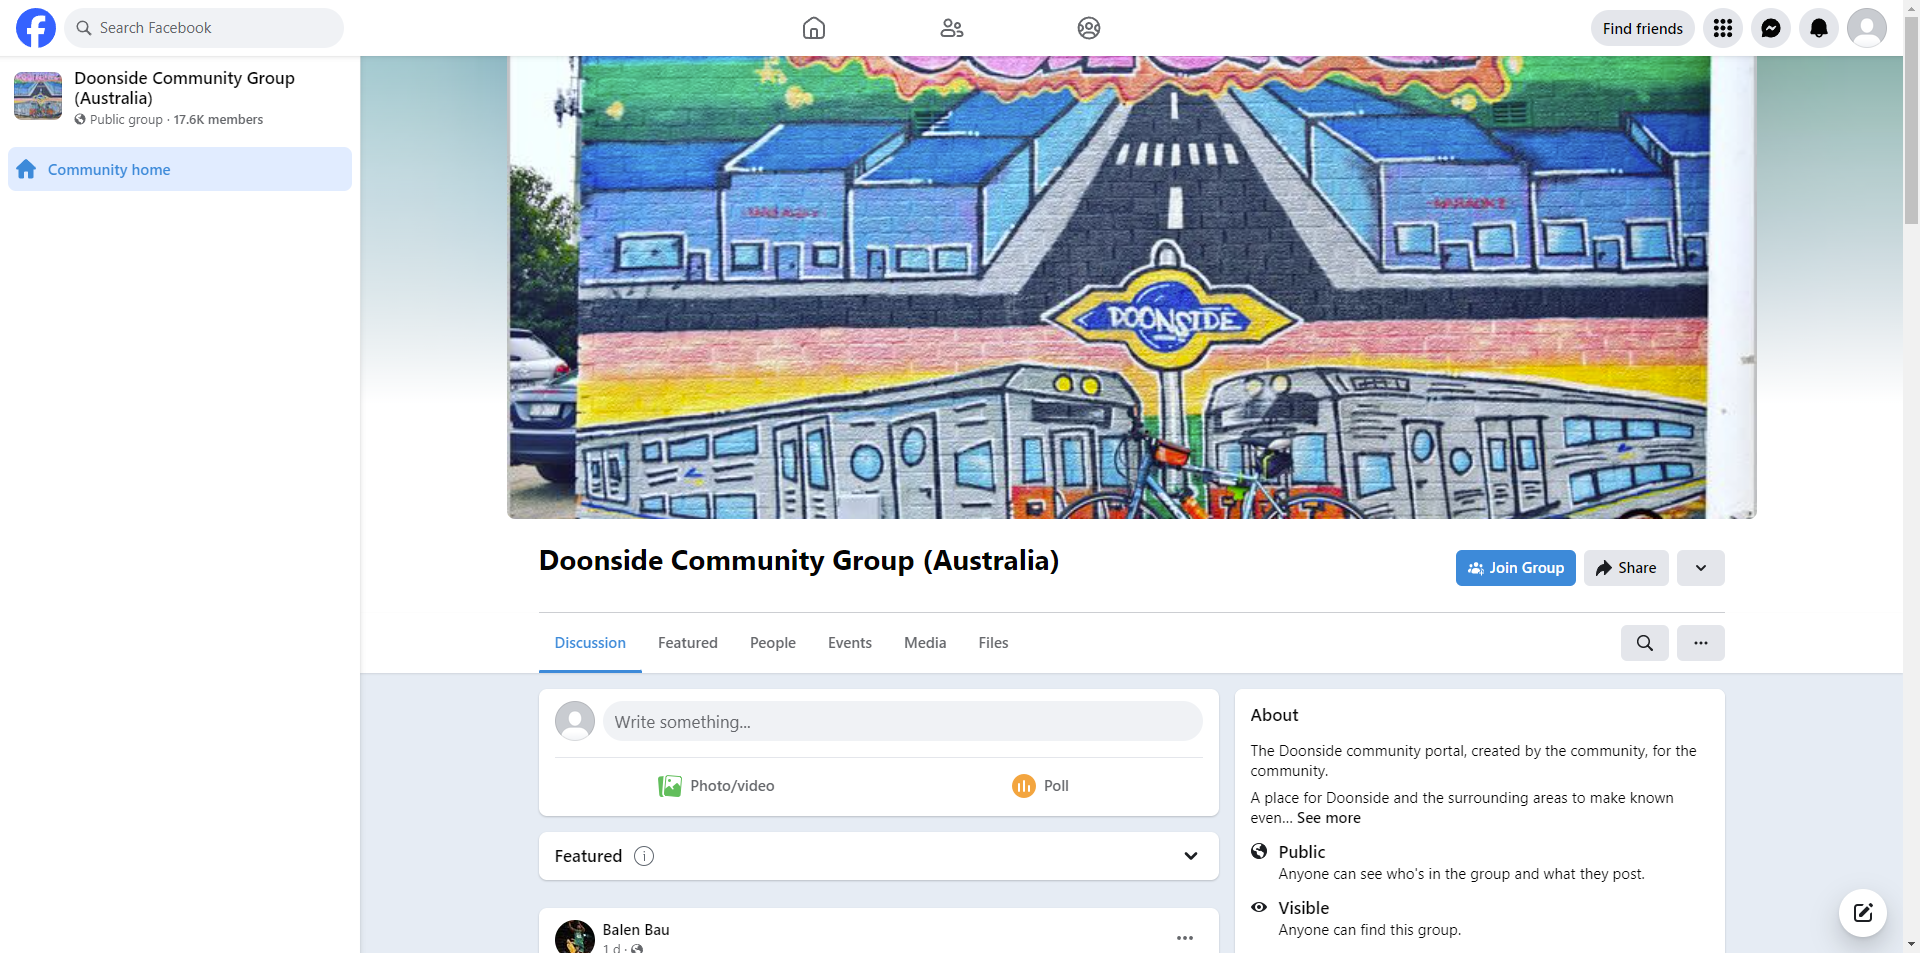 Doonside Community Group (Australia)